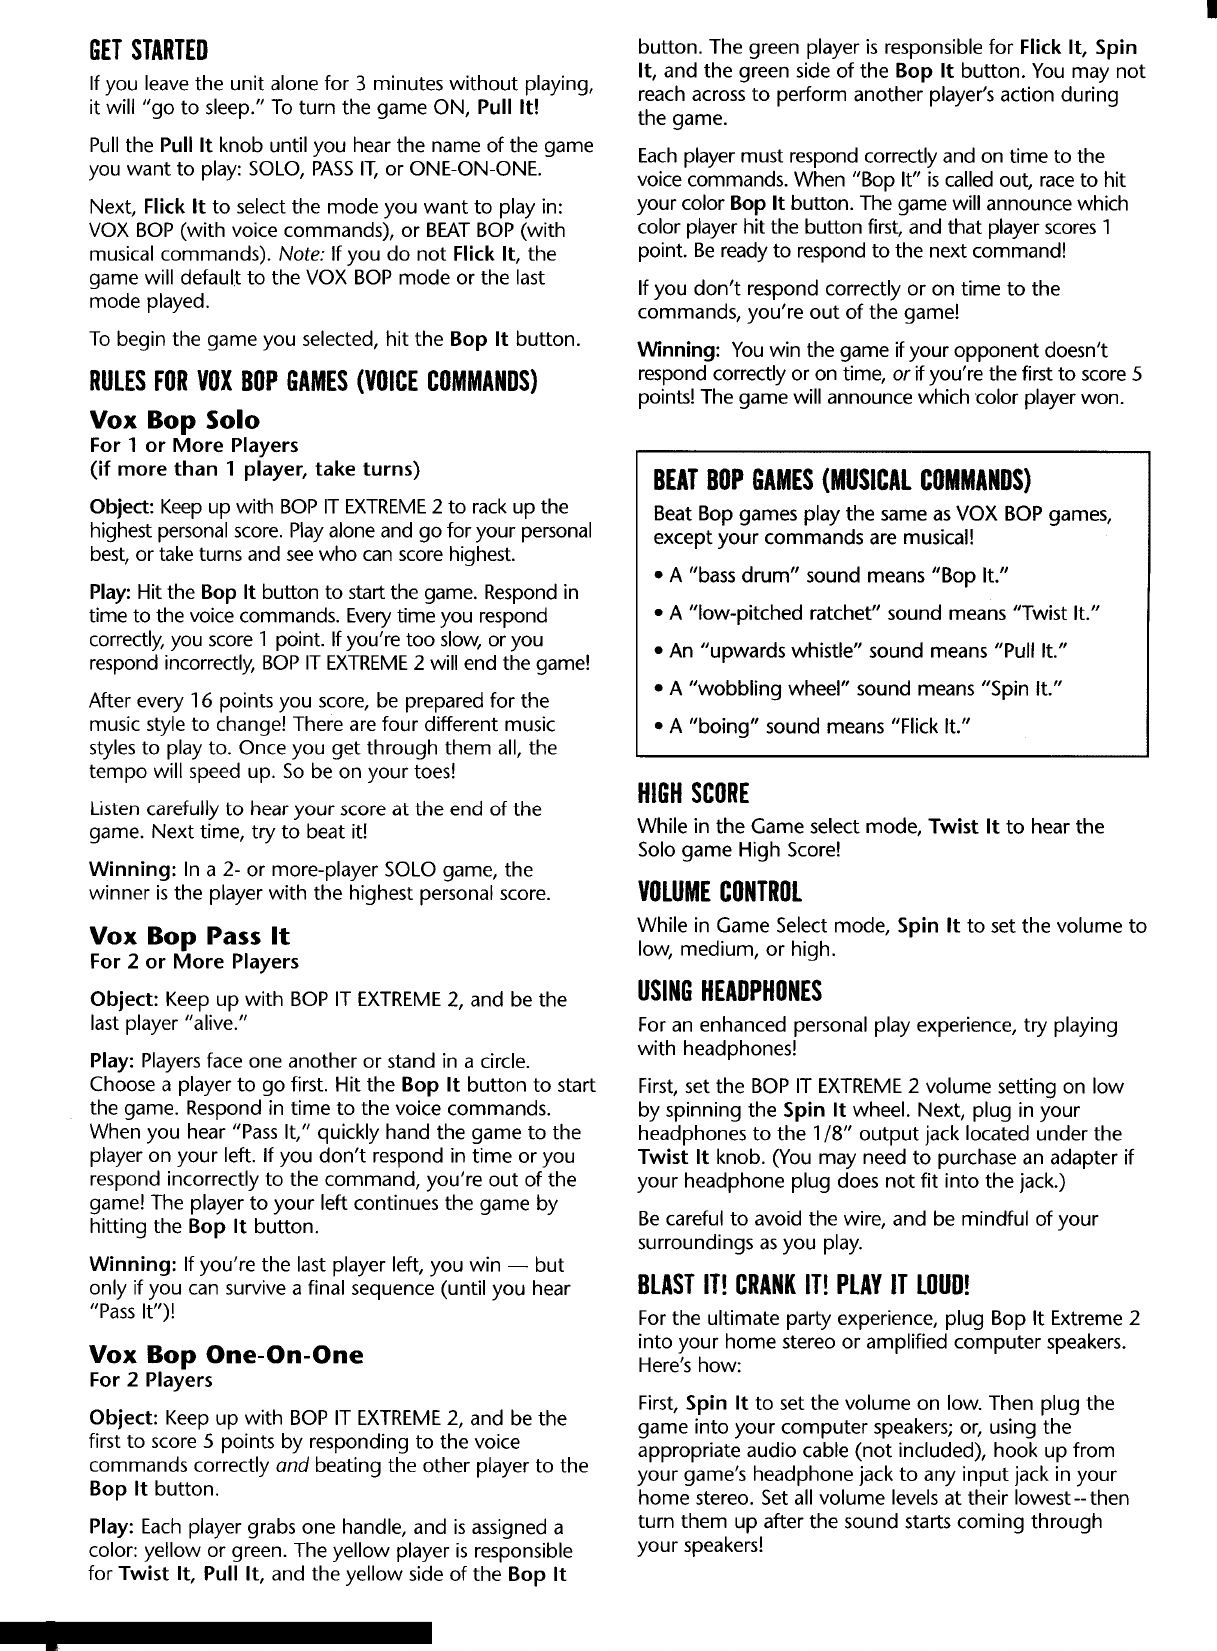 Page 3 of 4 - Milton-Bradley Milton-Bradley-Bop-It-Extreme-2-Instructions- ManualsLib - Makes It Easy To Find Manuals Online!  Milton-bradley-bop-it-extreme-2-instructions